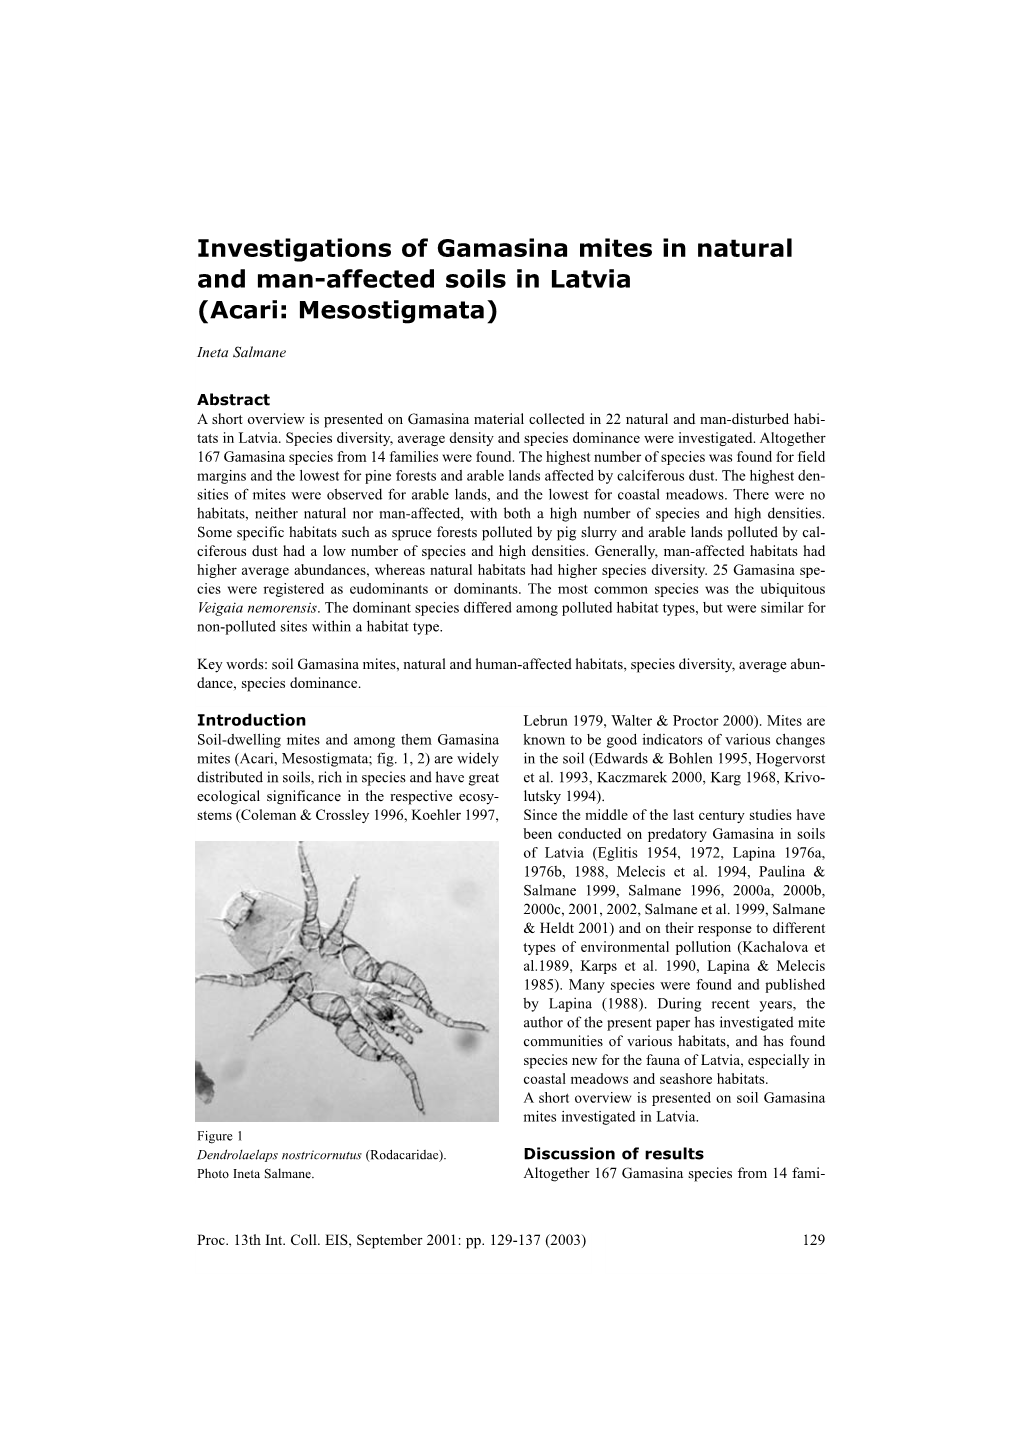 Investigations of Gamasina Mites in Natural and Man-Affected Soils in Latvia (Acari: Mesostigmata)